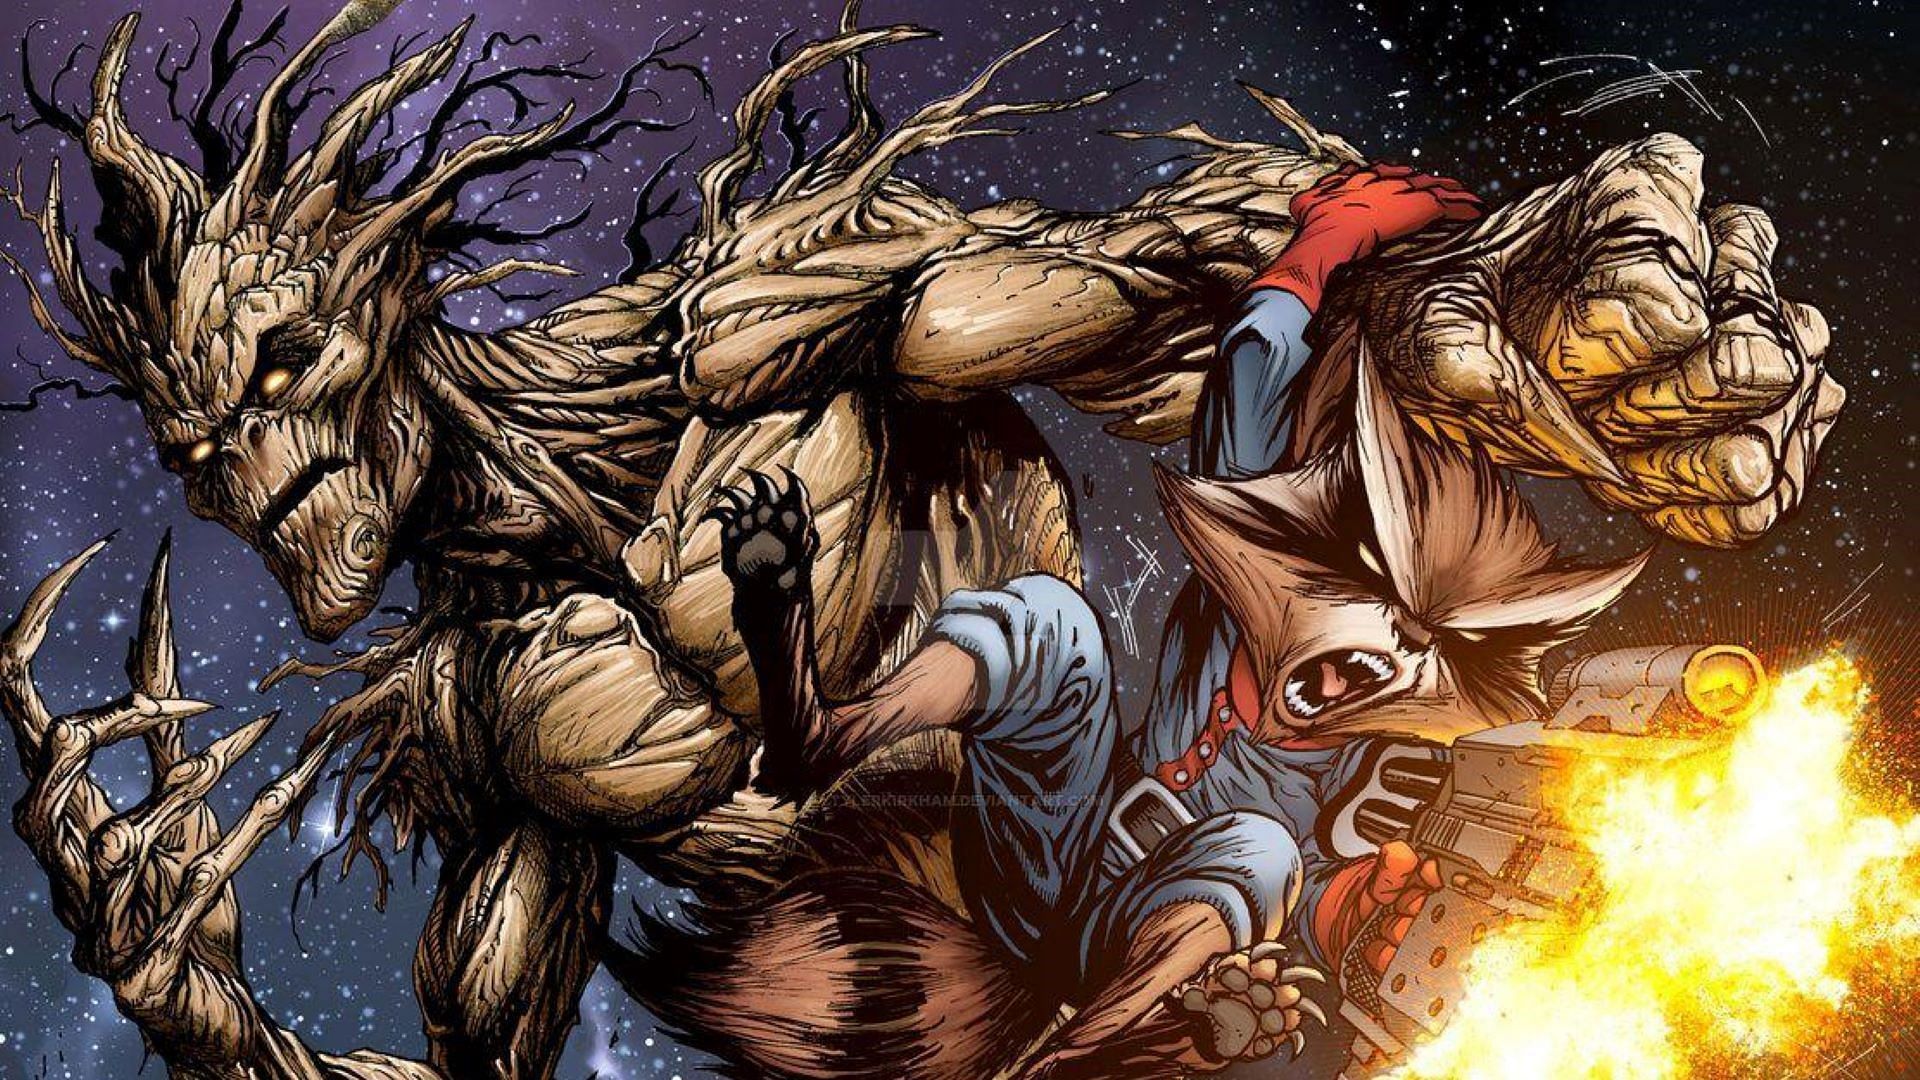 Groot and Rocket Raccoon in Marvel Comics (image via Marvel)